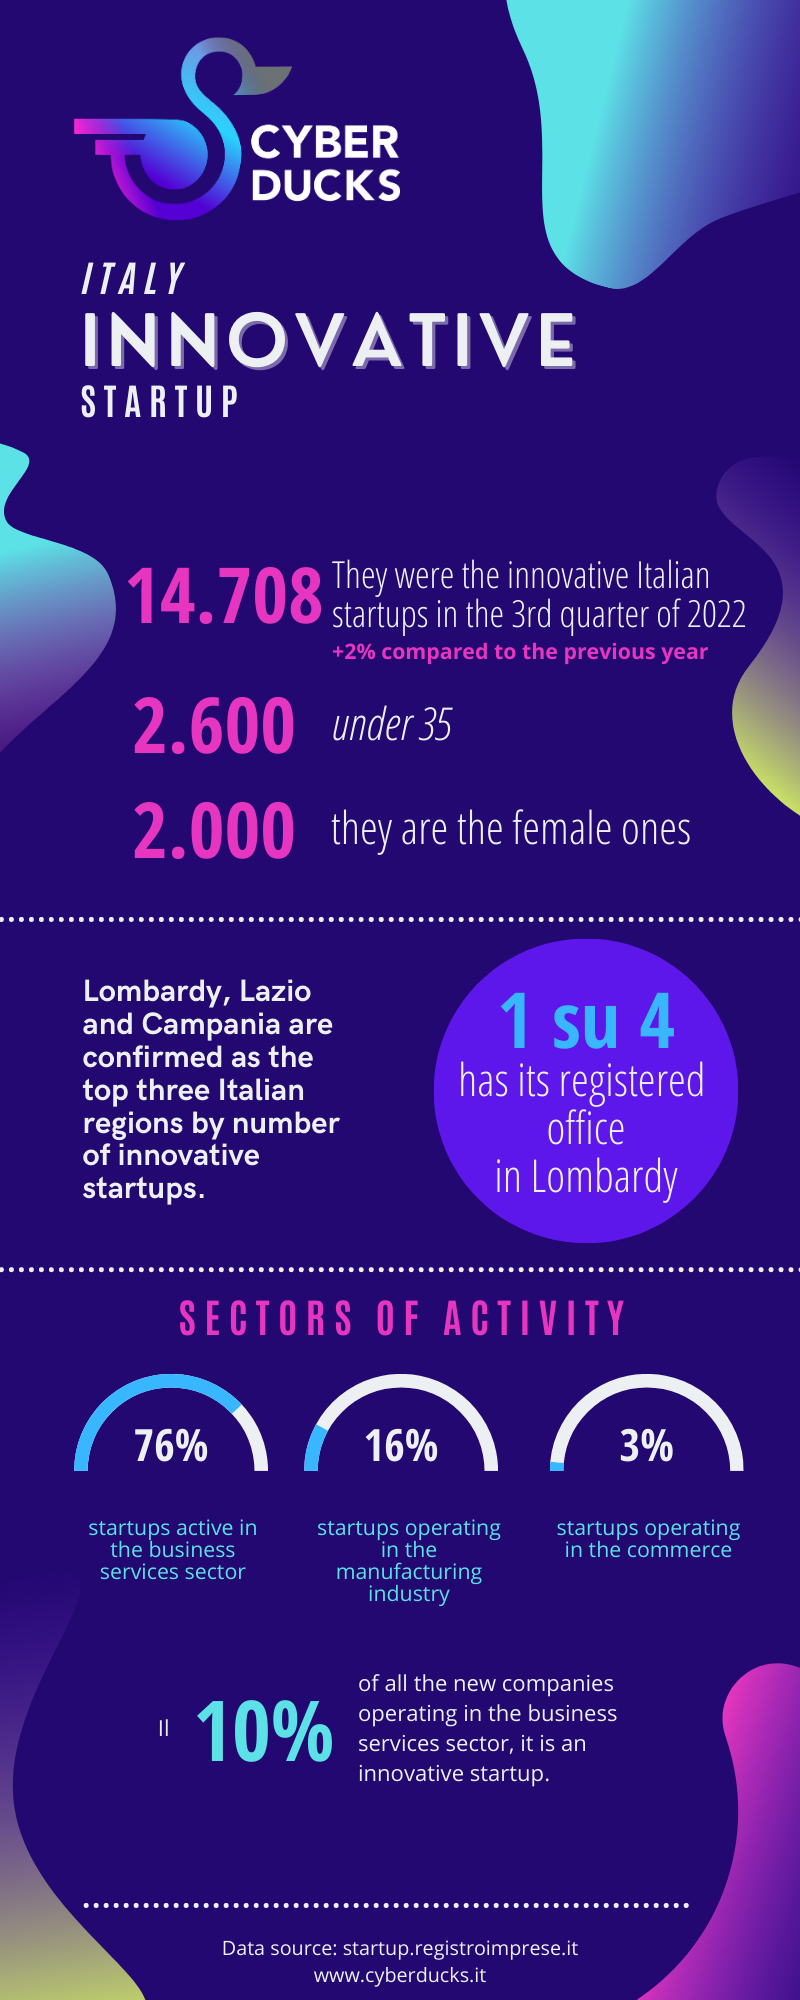 Startup innovative Italia